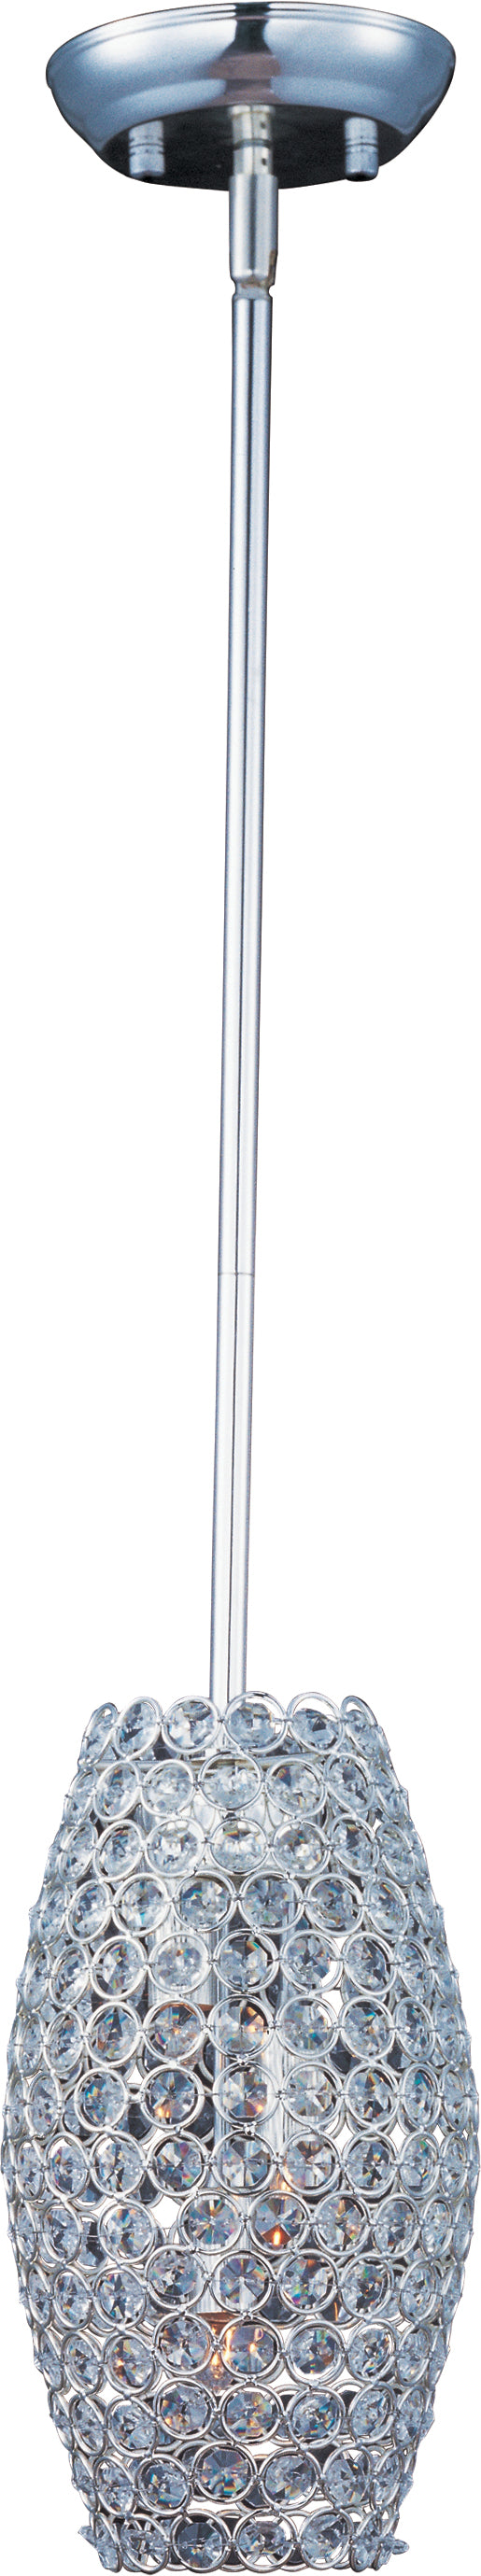 Maxim Glimmer 3-Light Pendant